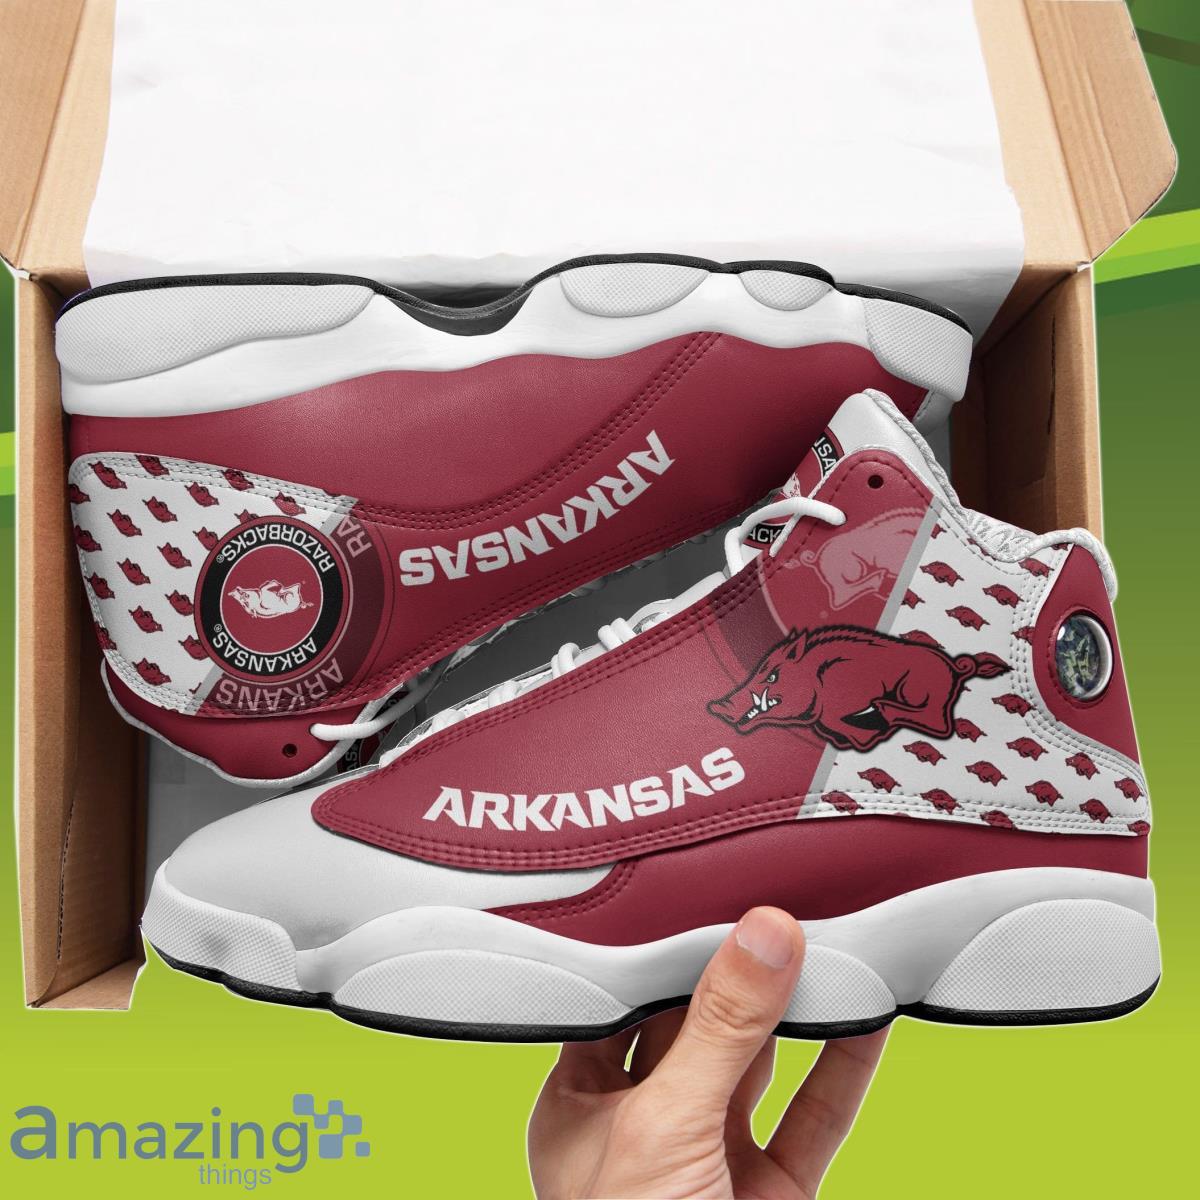 Arkansas Razorbacks Air Jordan 13 Sneakers Impressive Gift For Friends Product Photo 1